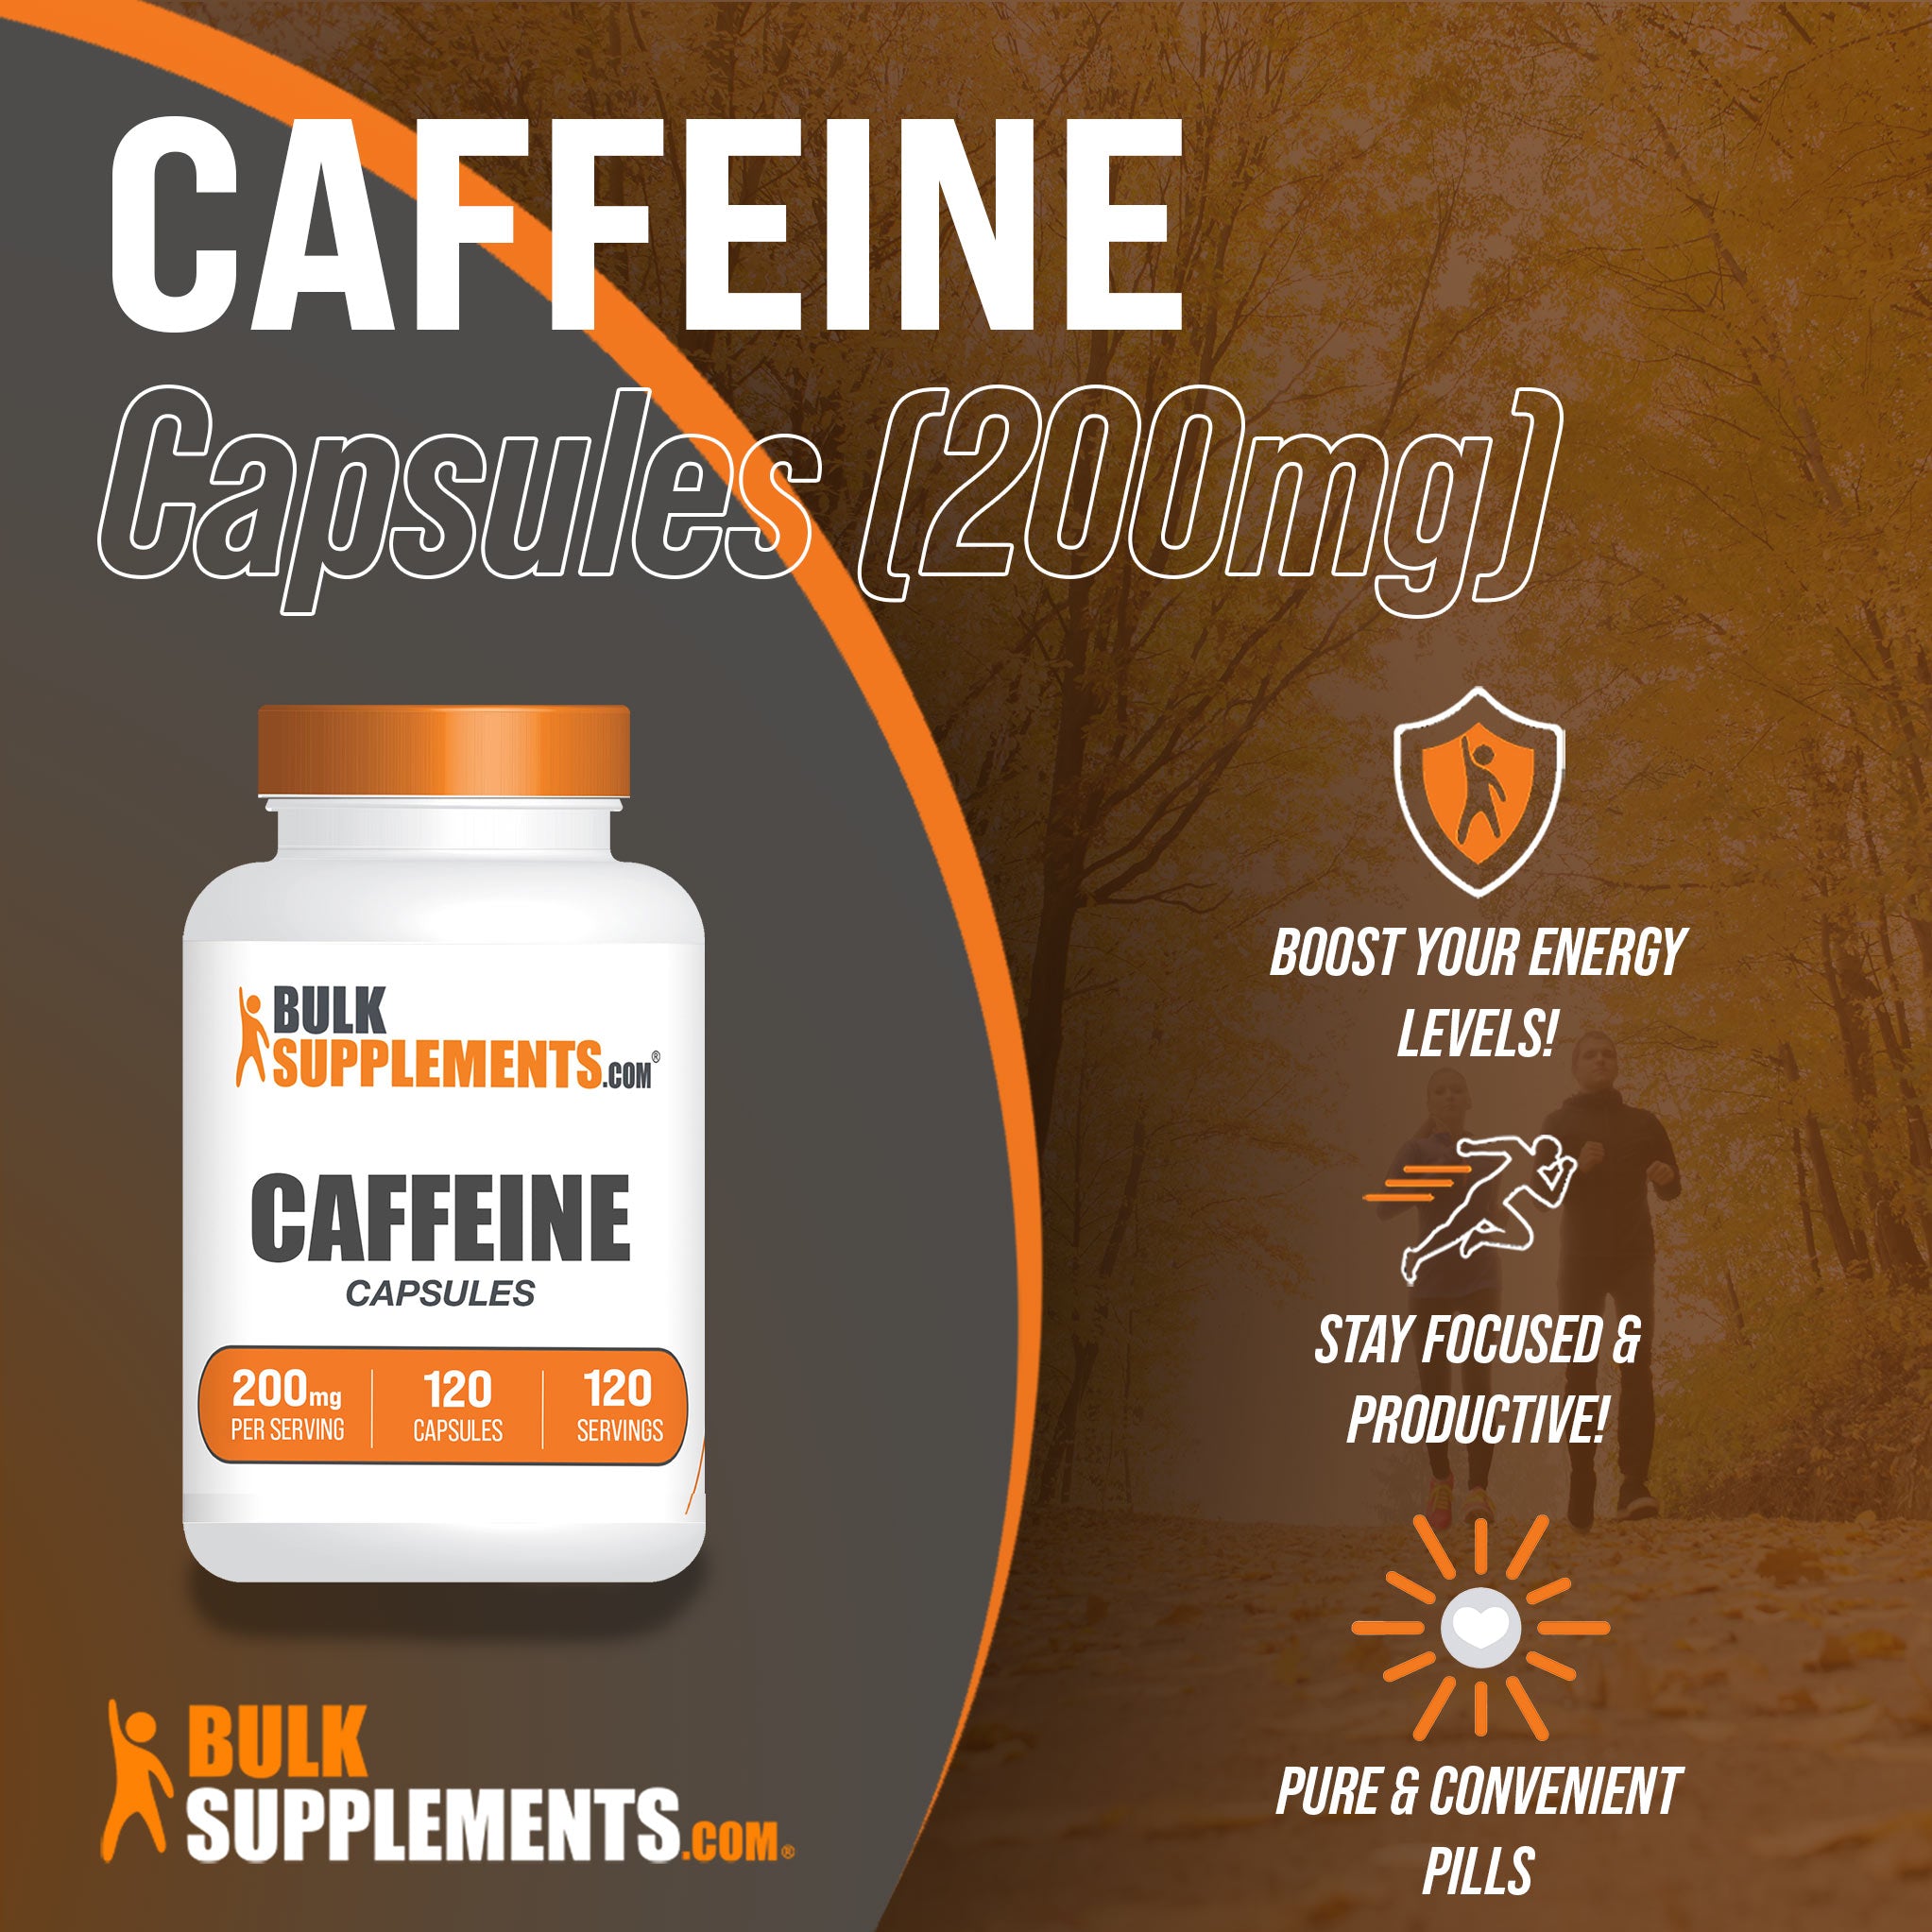 120 caffeine pills for energy boosts!